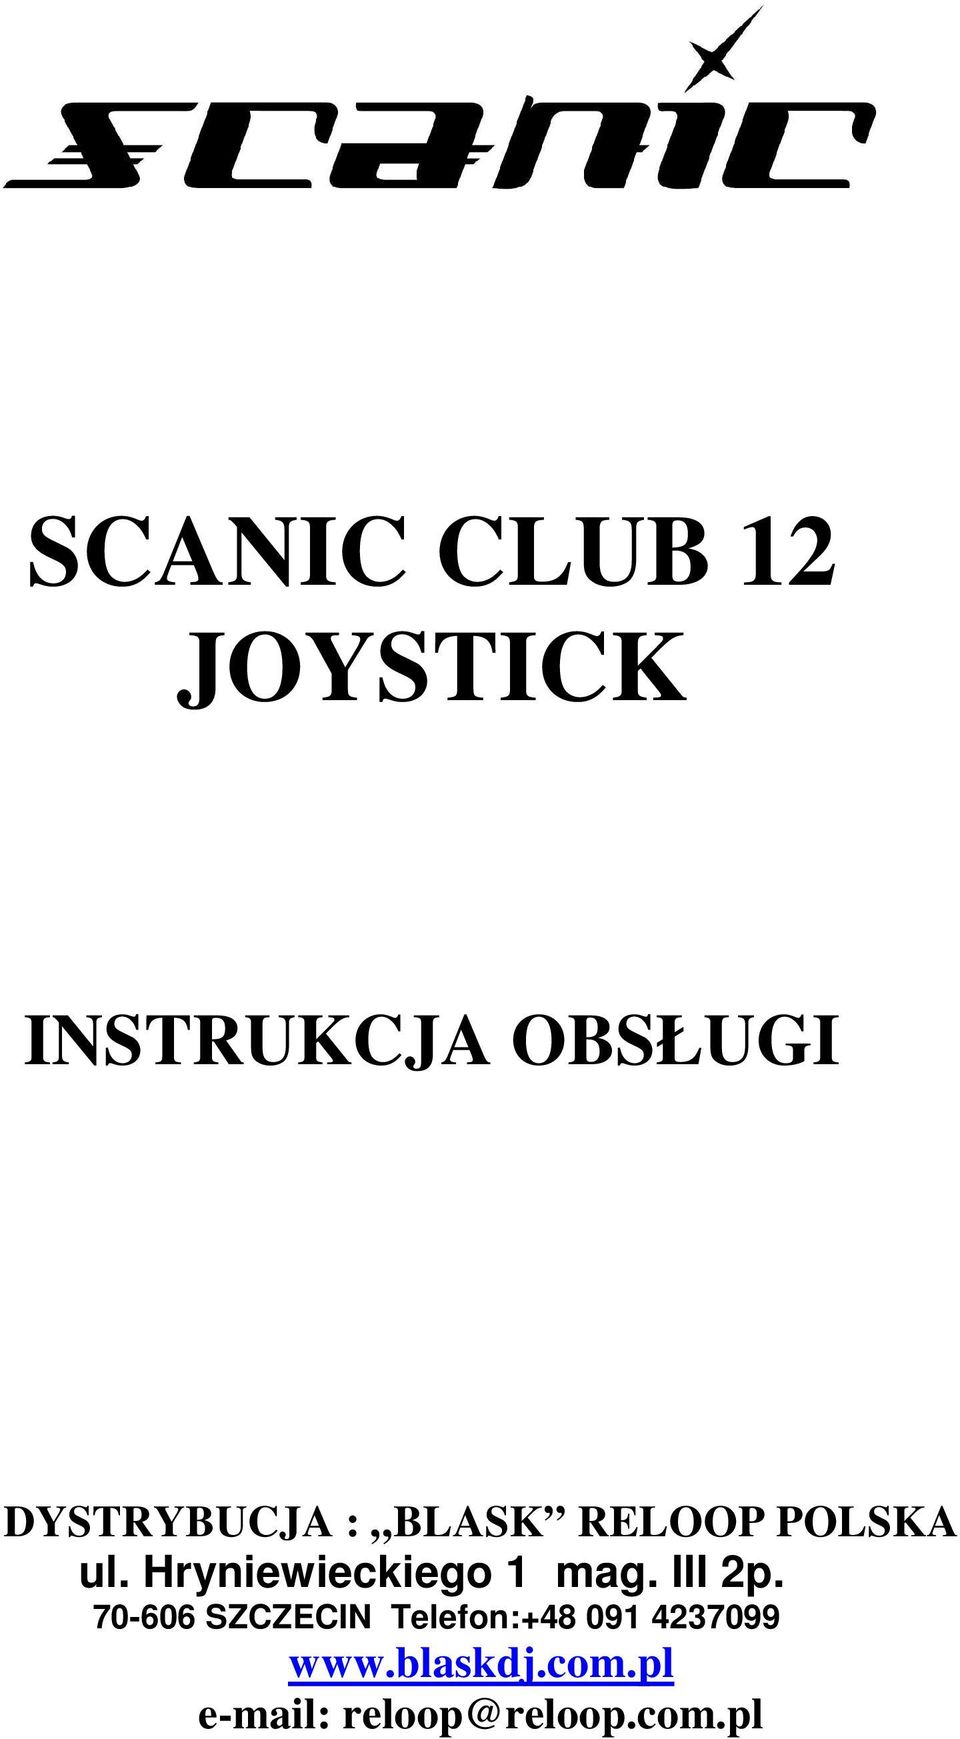 Hryniewieckiego 1 mag. III 2p.